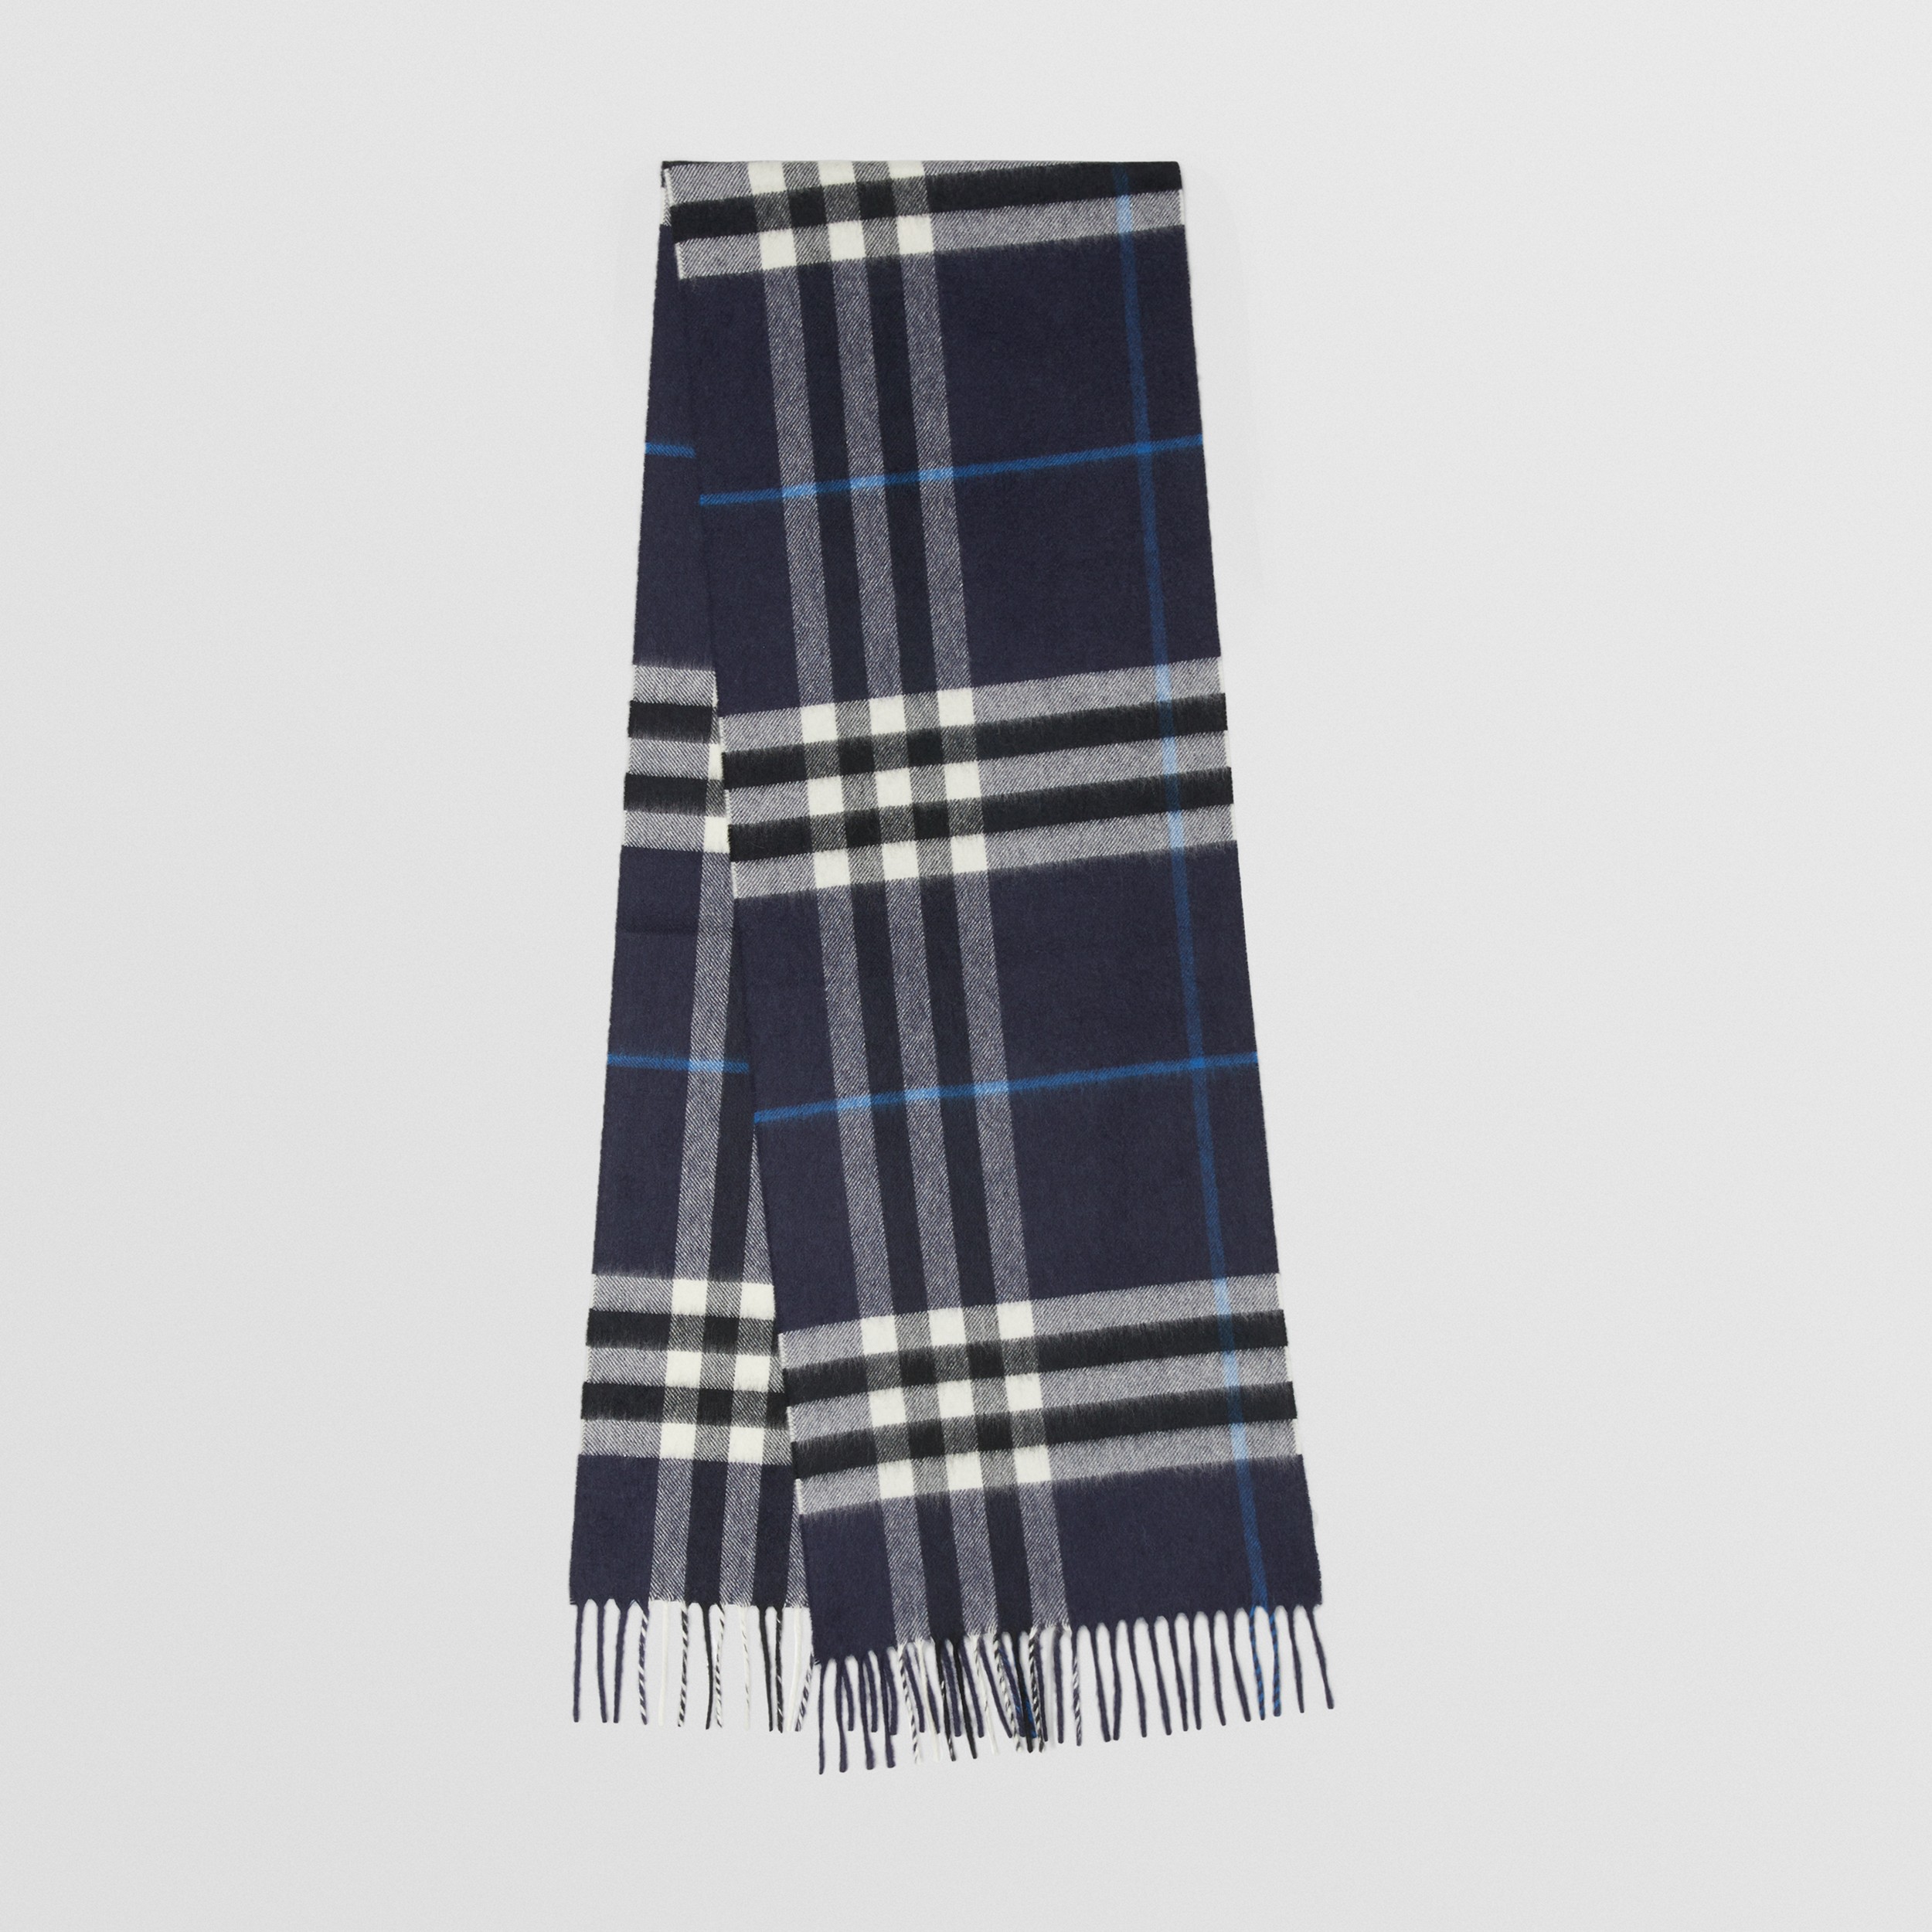 NoName Navy blue scarf discount 92% WOMEN FASHION Accessories Shawl Navy Blue Navy Blue Single 